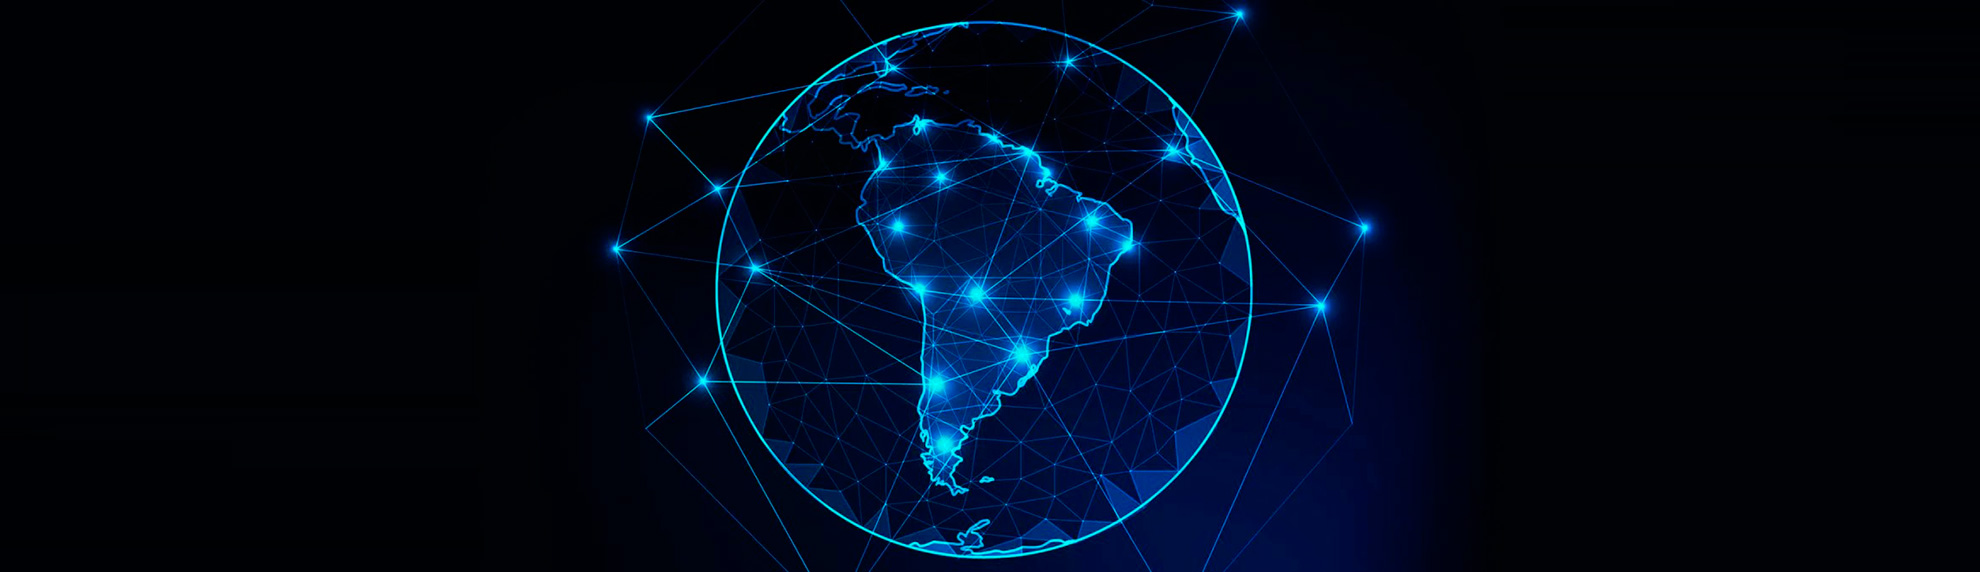 Mobile network sharing: A new development model for Latin America